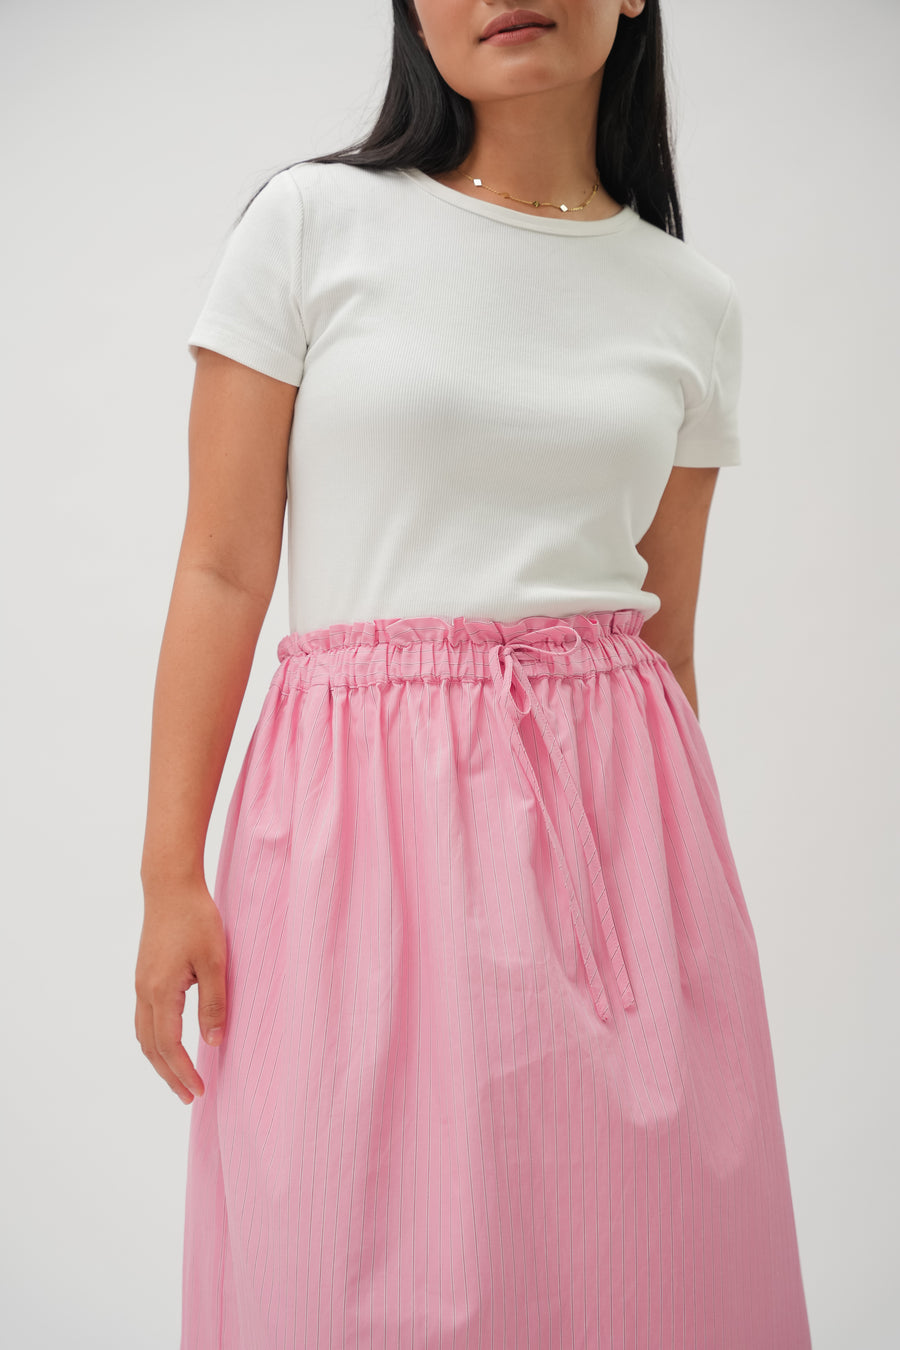 Good Time Skirt in Pink Stripe